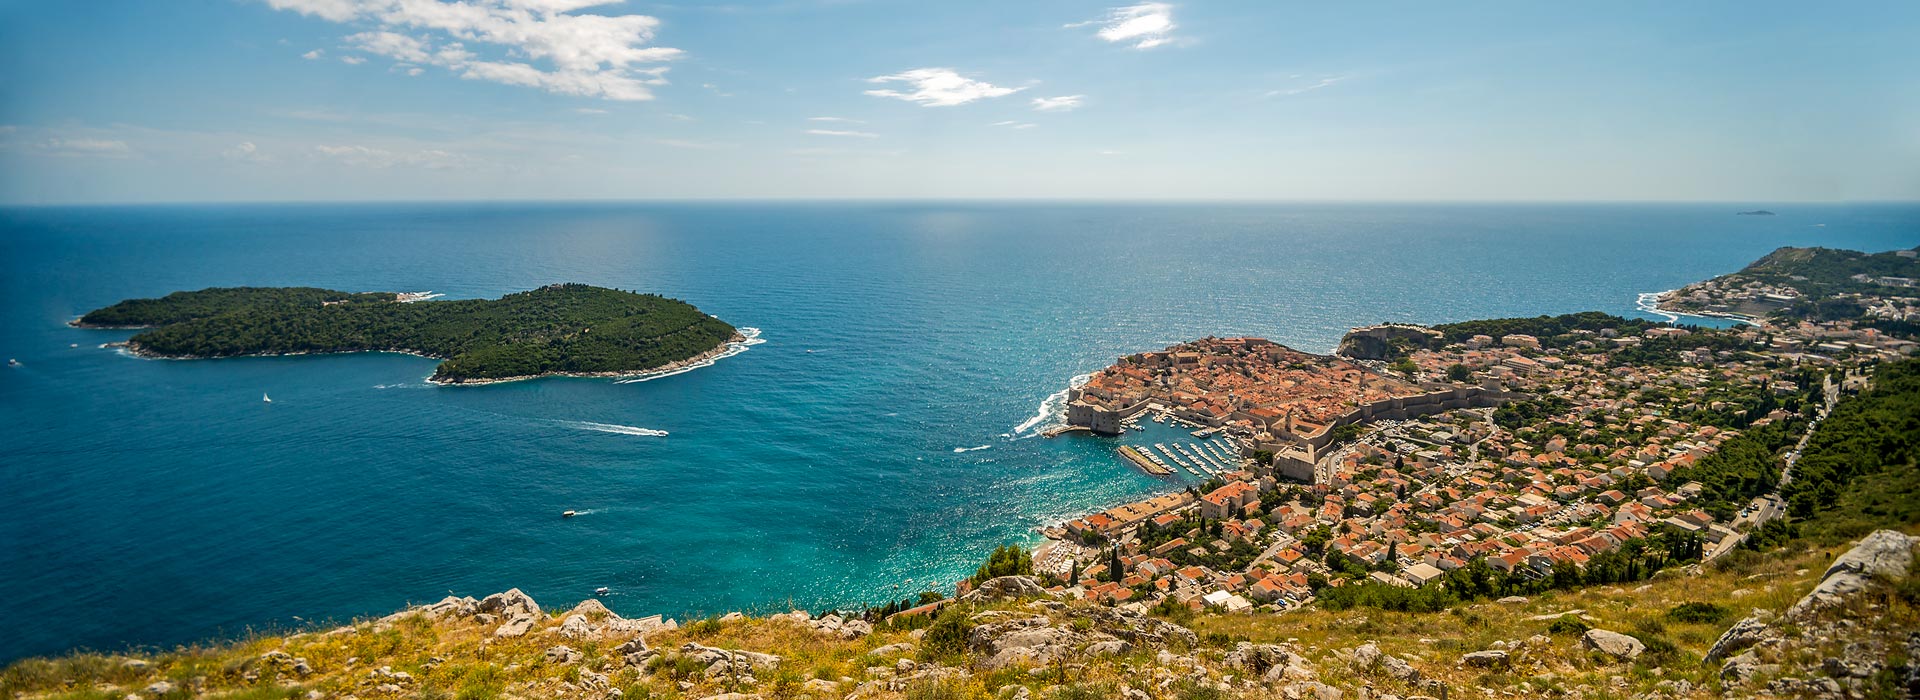 Excursion to Dubrovnik